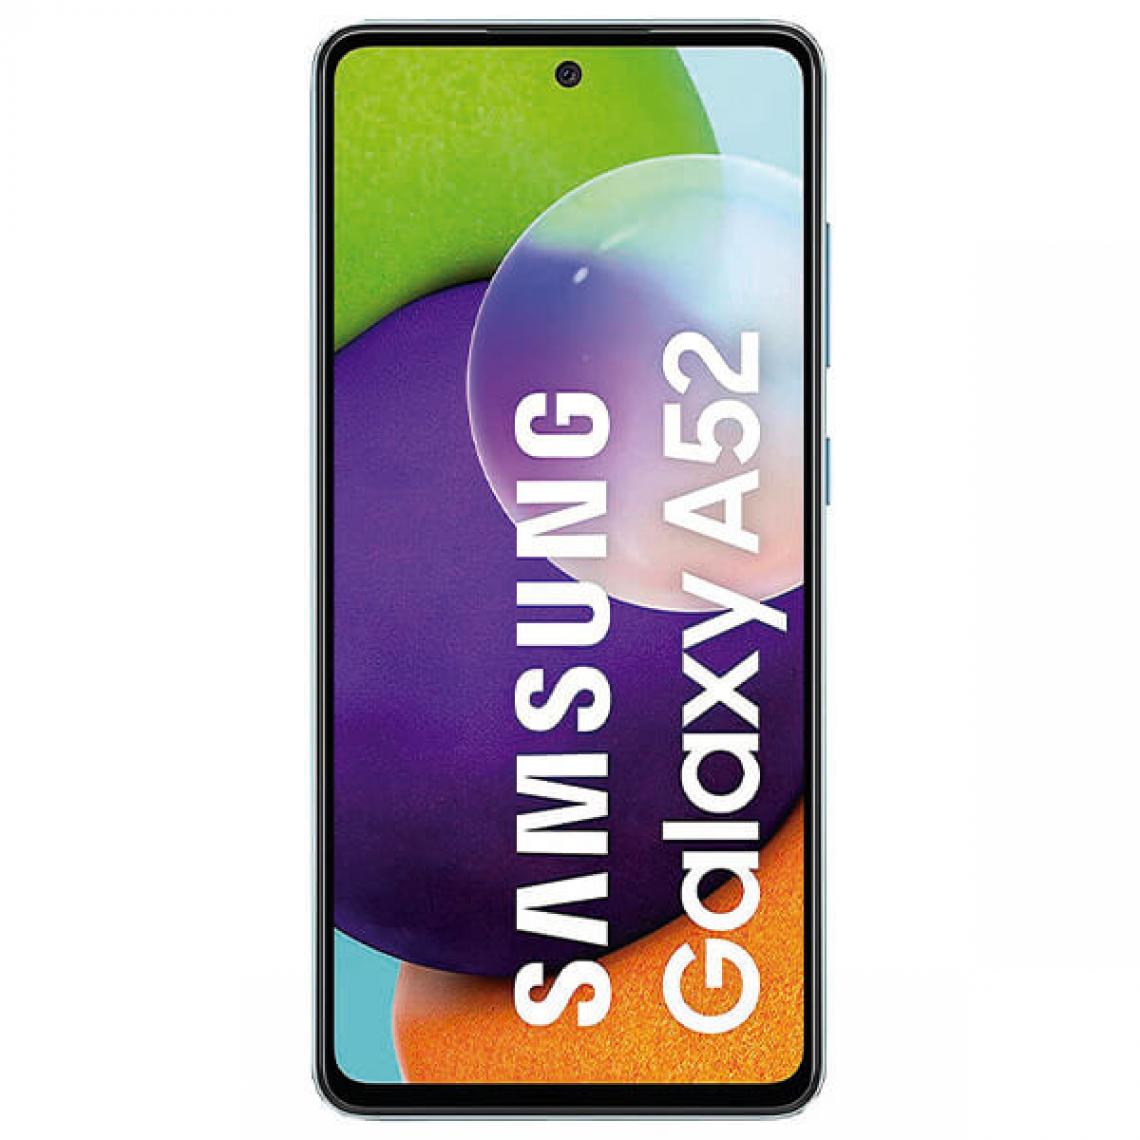 Samsung - Samsung Galaxy A52 6Go/128Go Bleu (Awesome Blue) Double SIM A525F - Smartphone Android